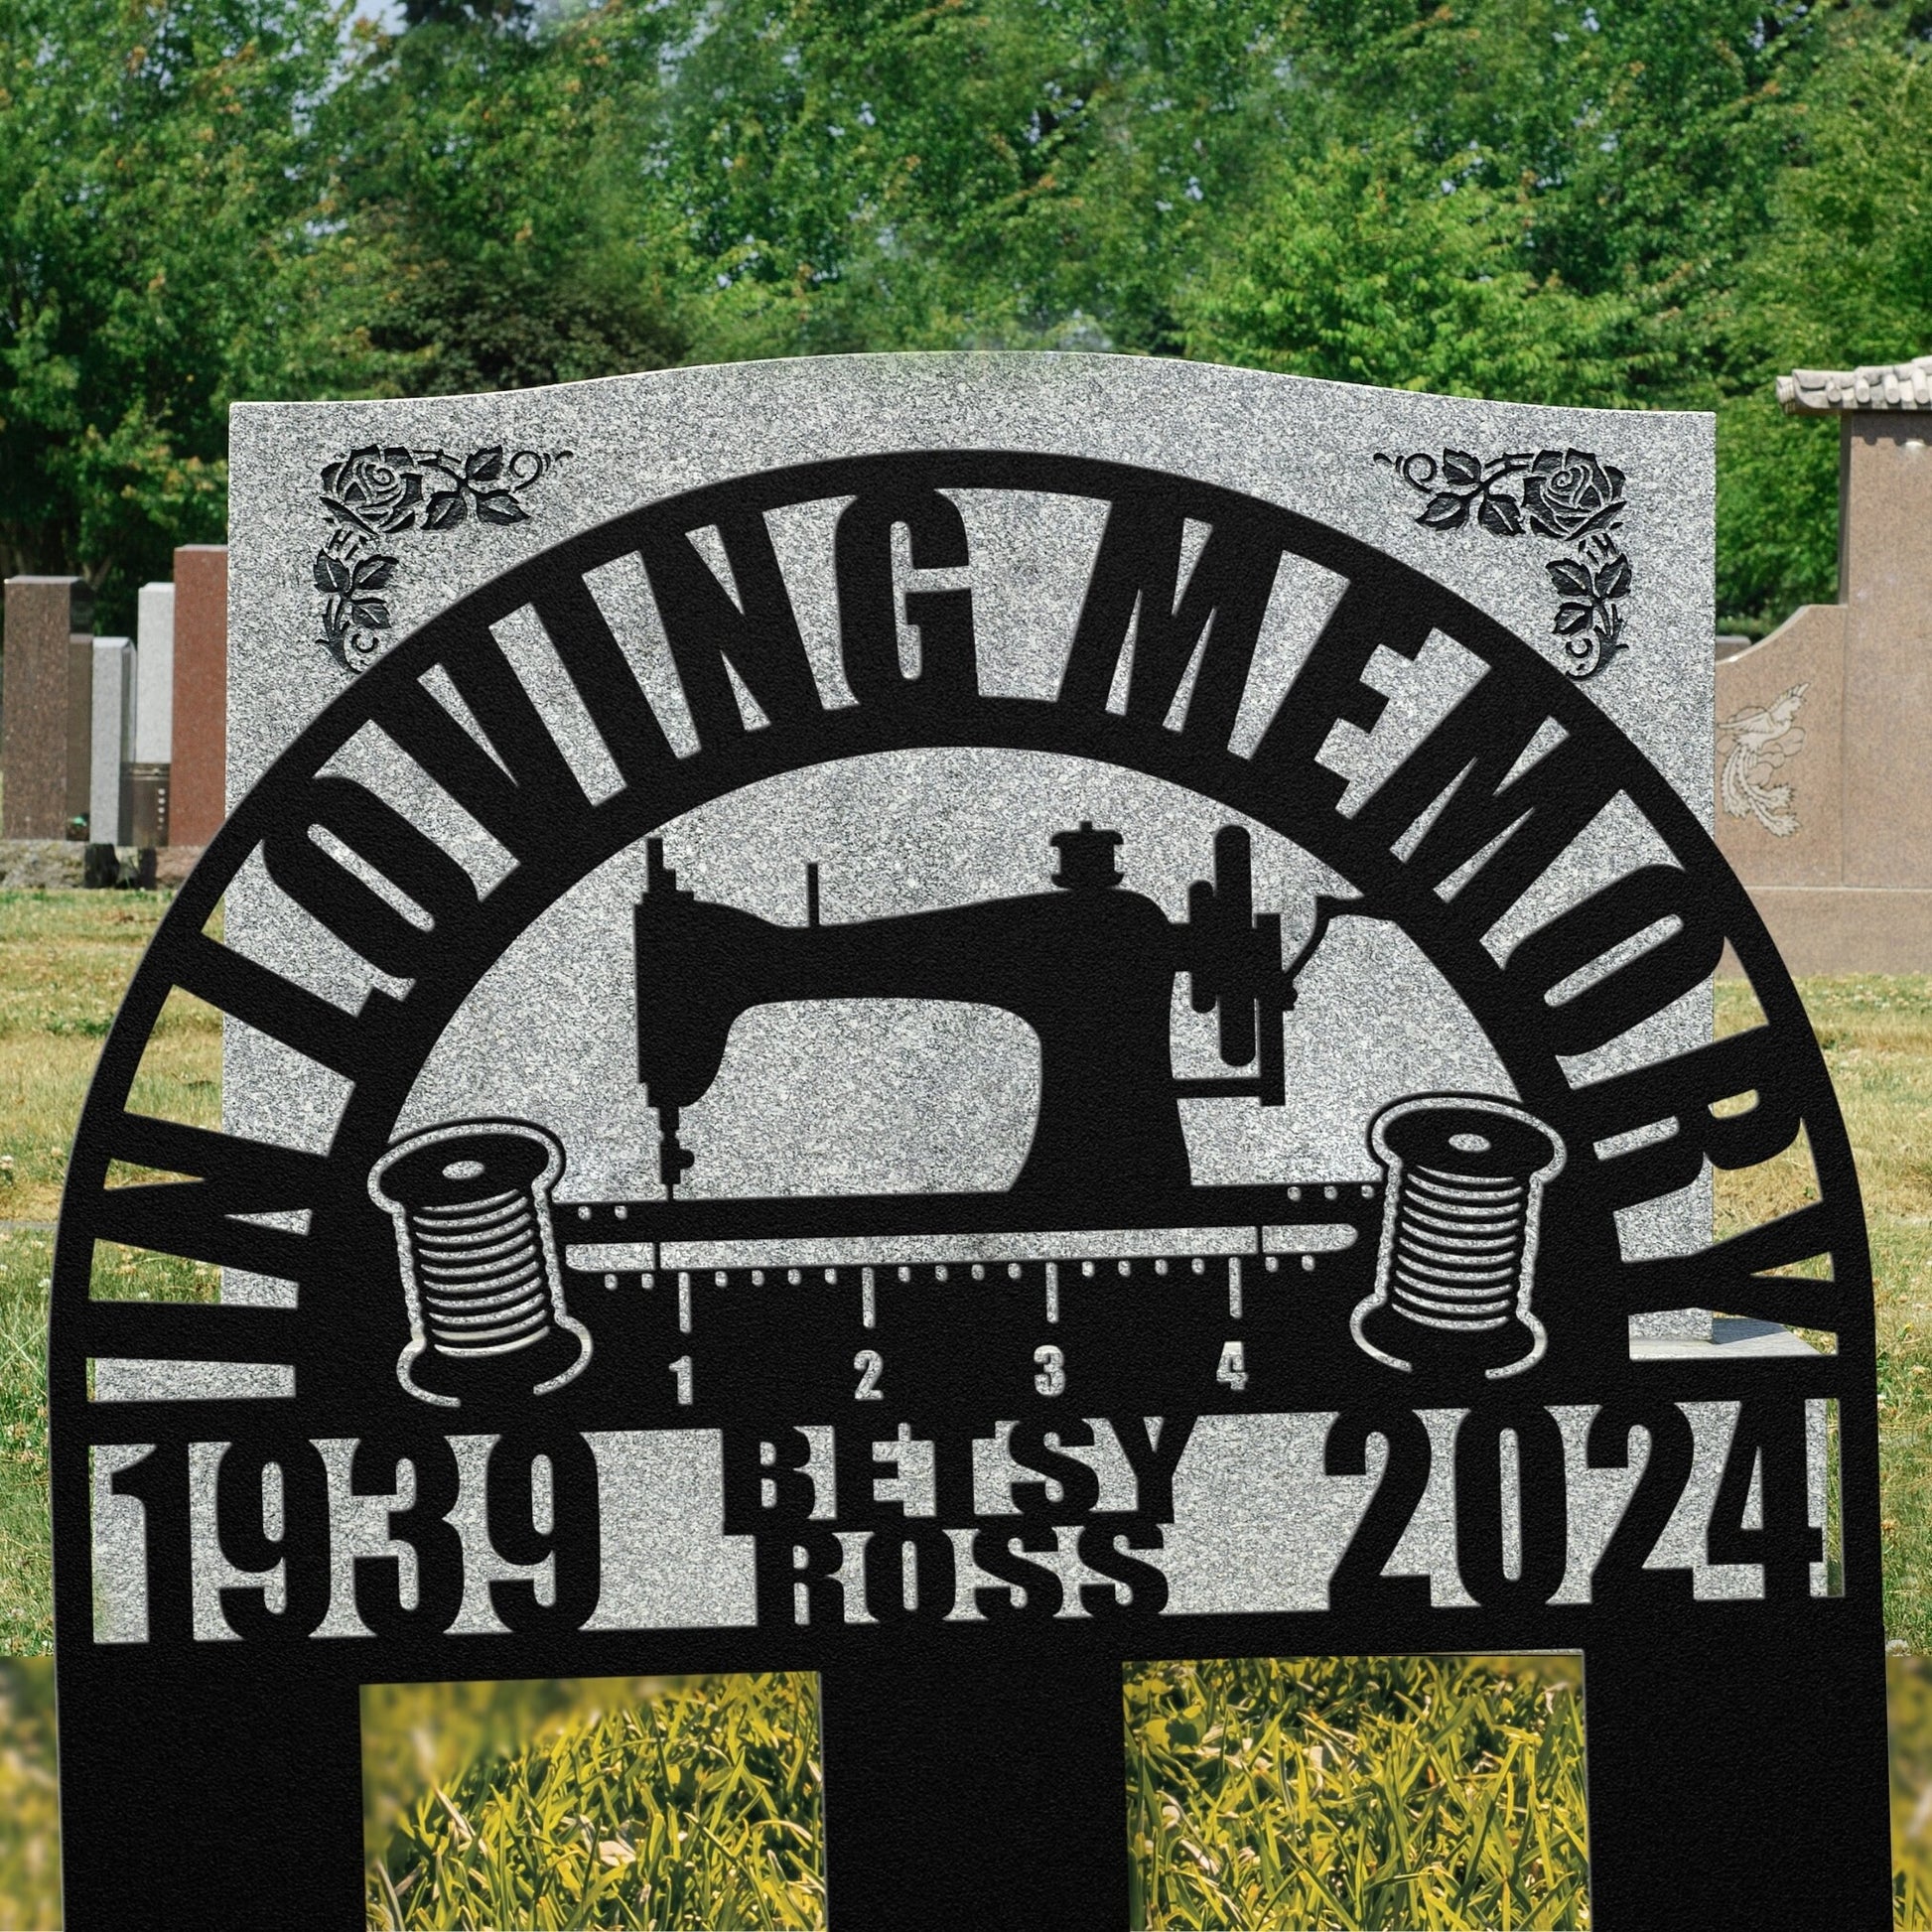 Seamstress Memorial Gift - Sewing Machine Wall Decor Remembrance Decorative Sign